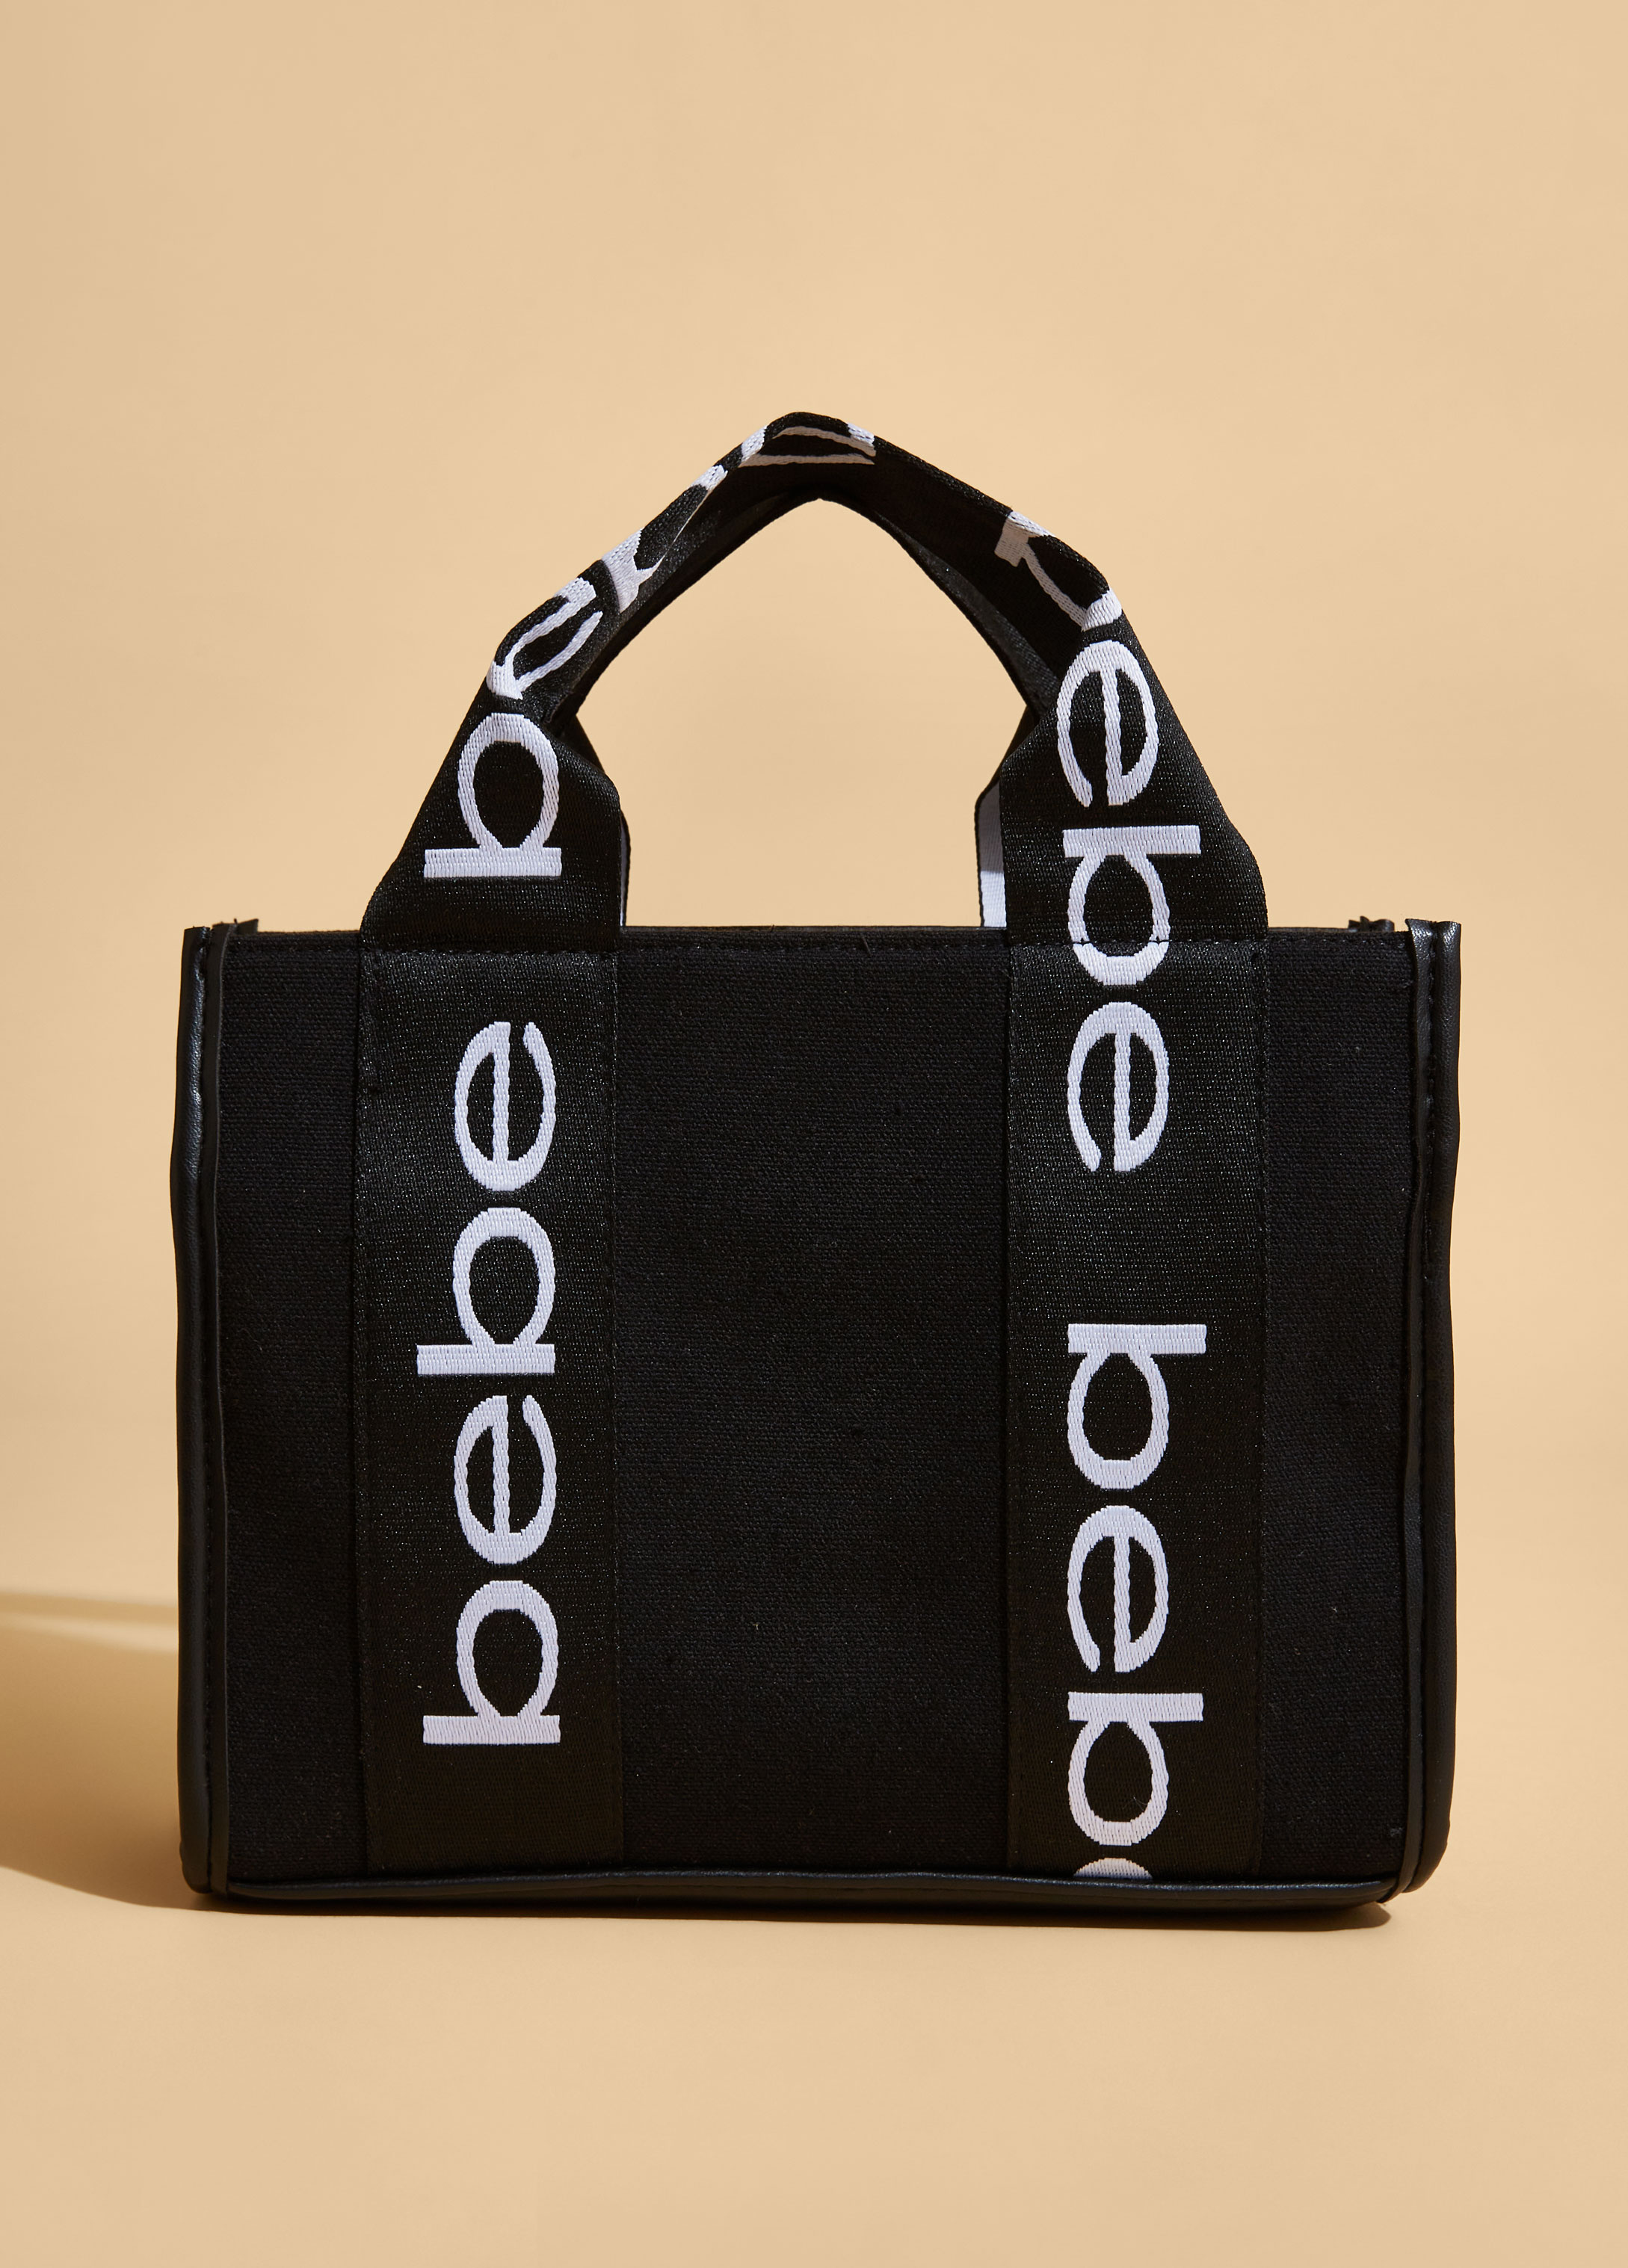 bebe Erika Mini Shopper Handbag Black: Handbags: Amazon.com